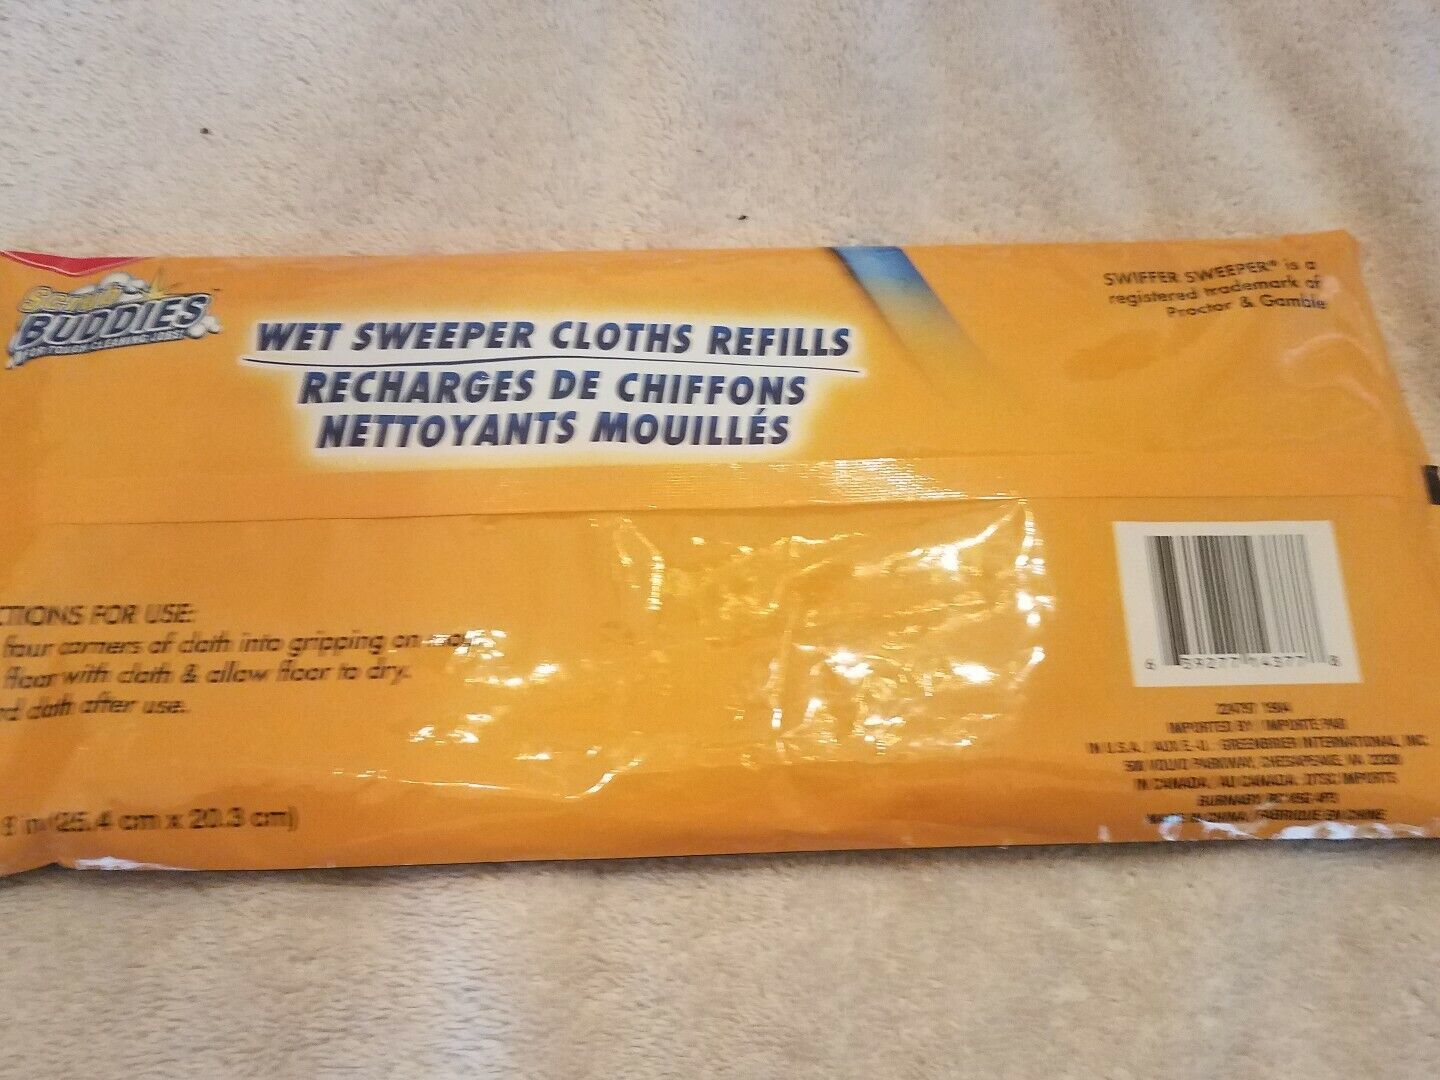 Scrub Buddies Wet Sweeper Cloth Refills - One Pack of 20 Refills